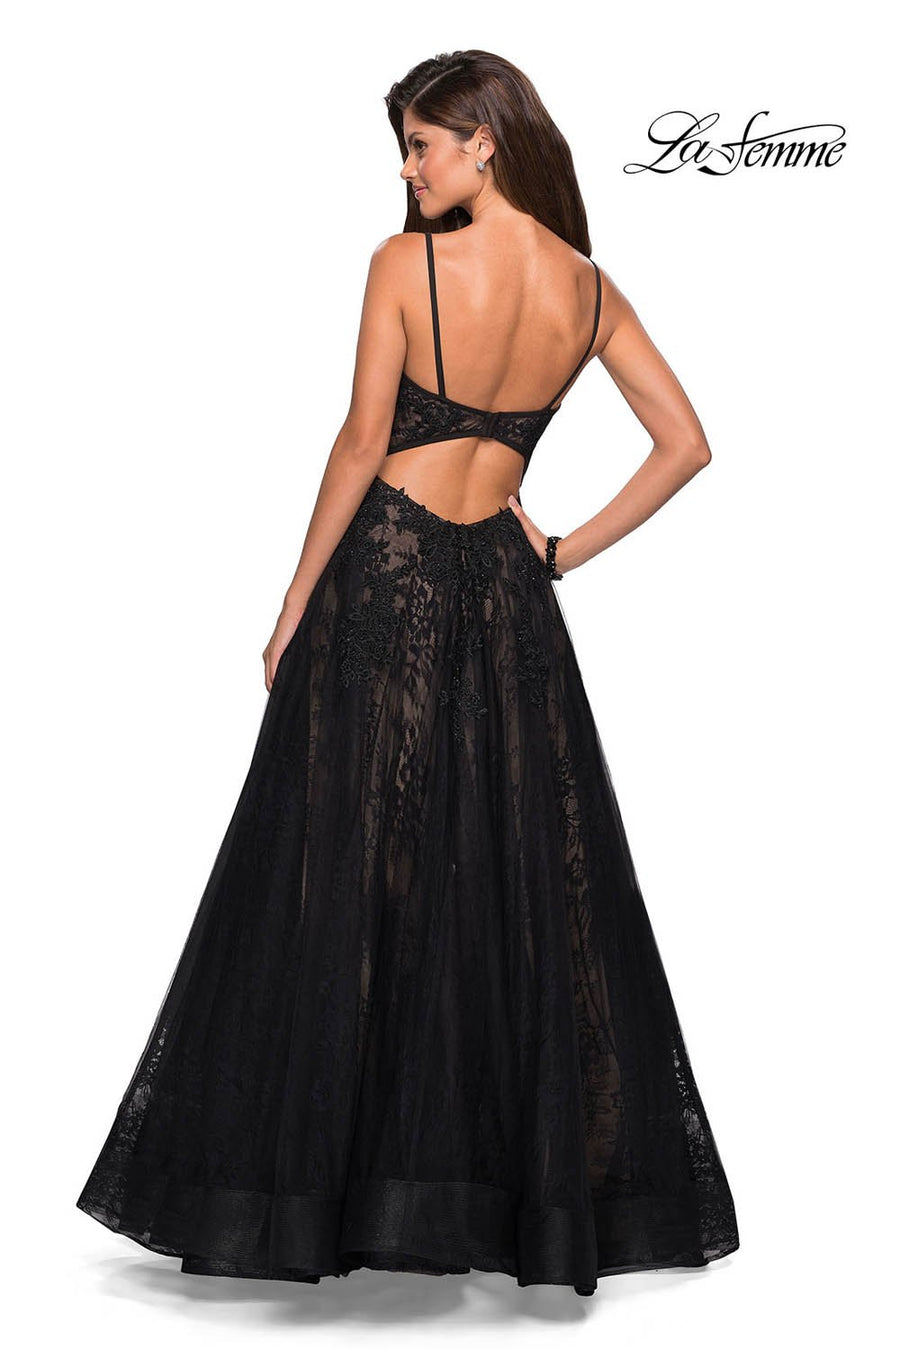 La Femme 27488 prom dress images.  La Femme 27488 is available in these colors: Black.